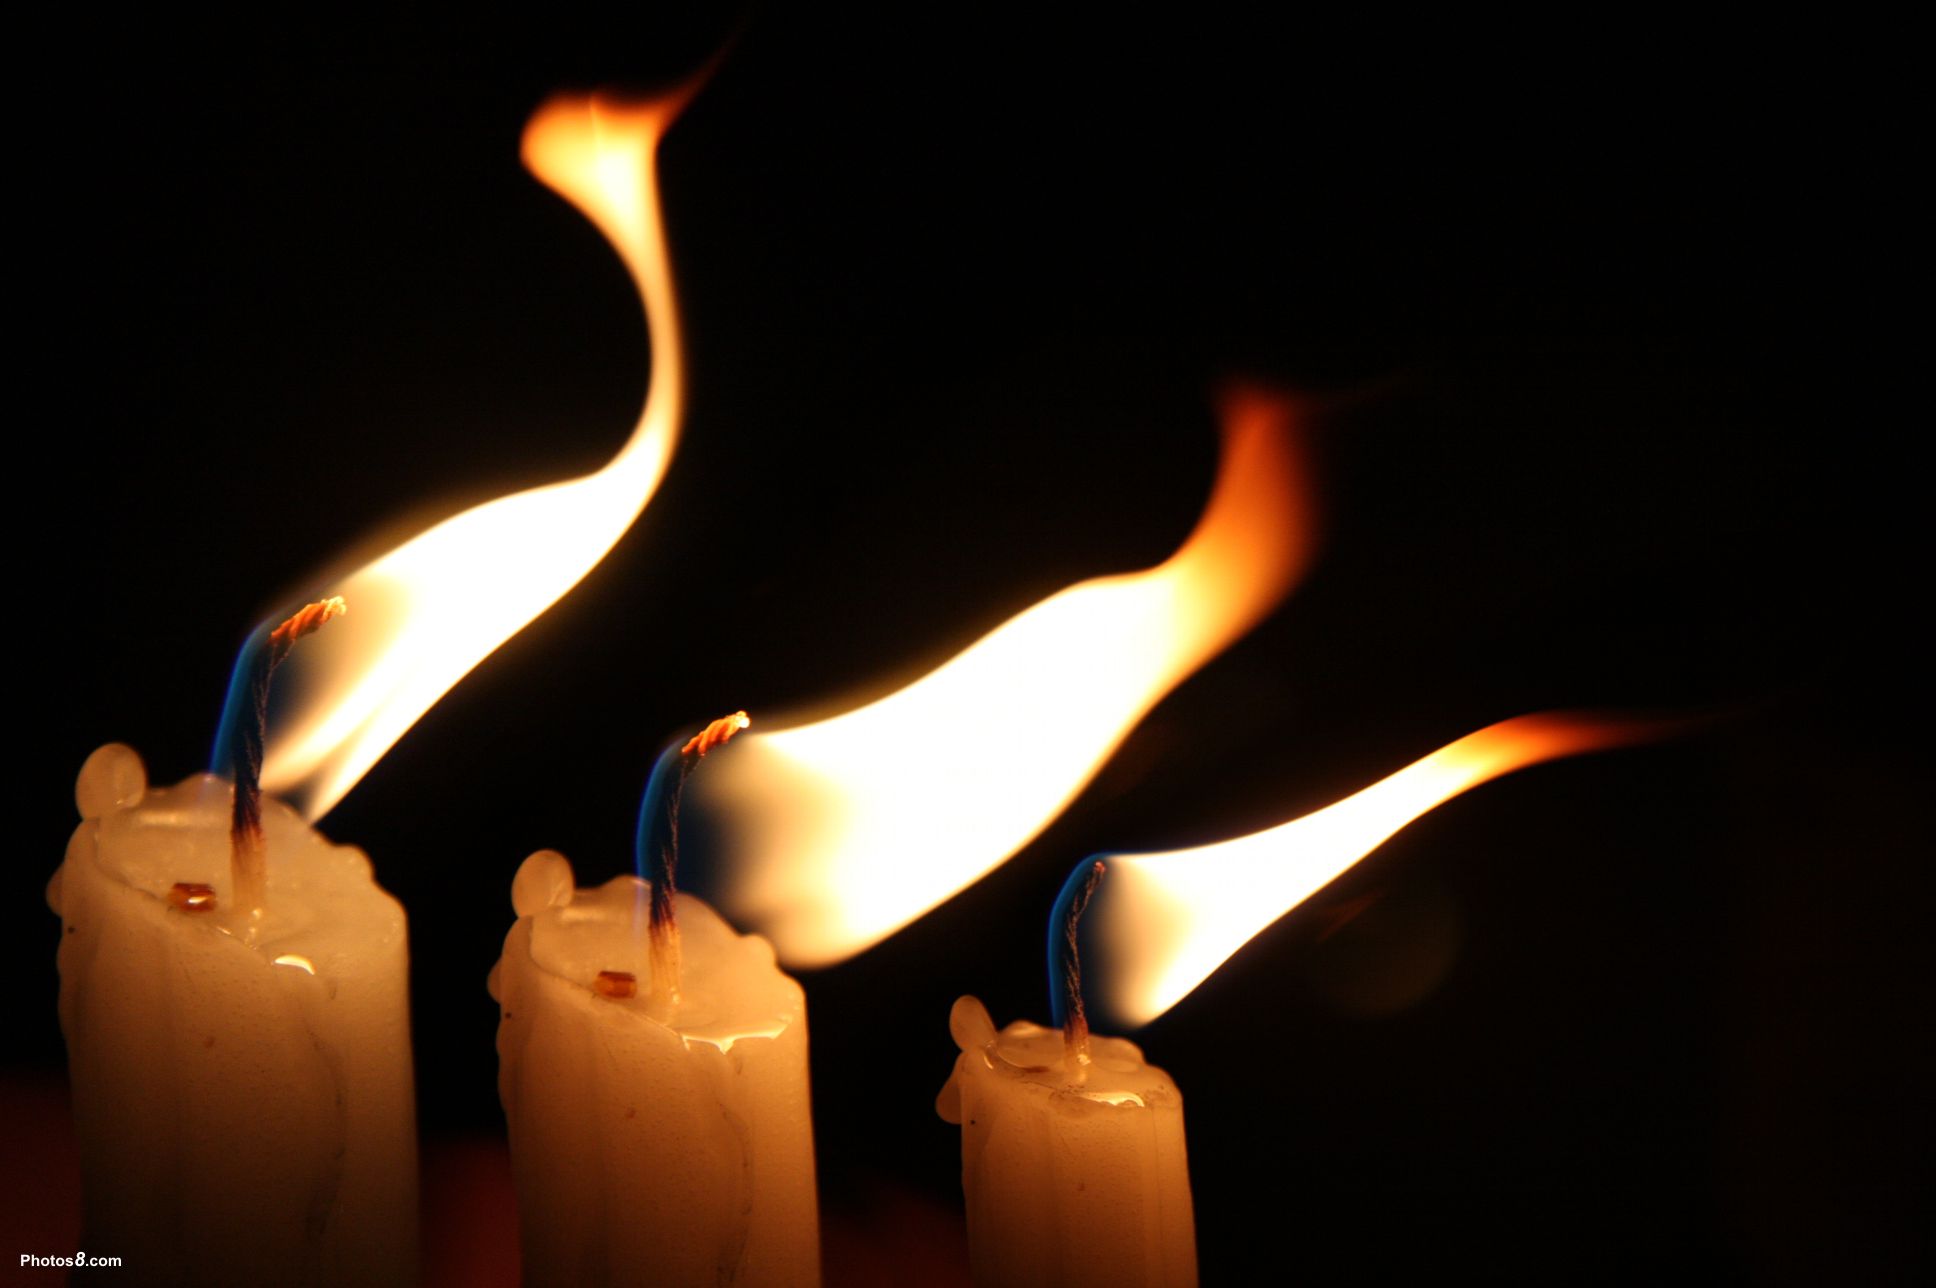 Горят три свечи. Горящие свечи. В пламени свечи. Огненные свечи. Три горящие свечи.